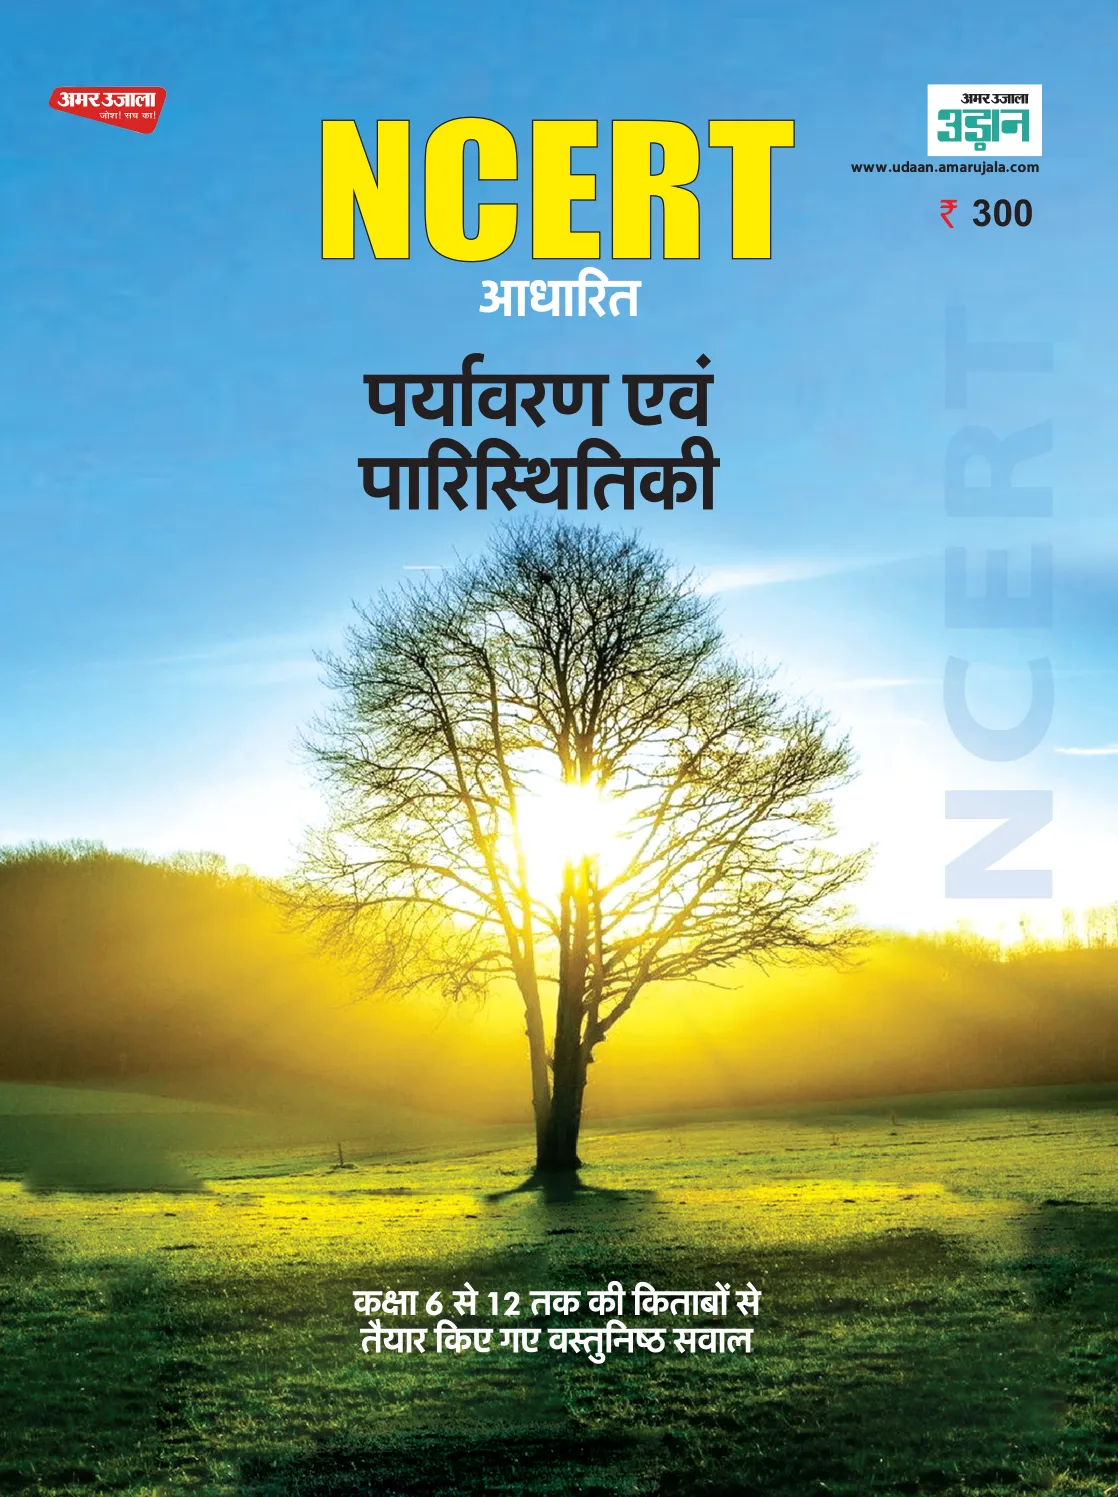 NCERT Objective Environment & Ecology